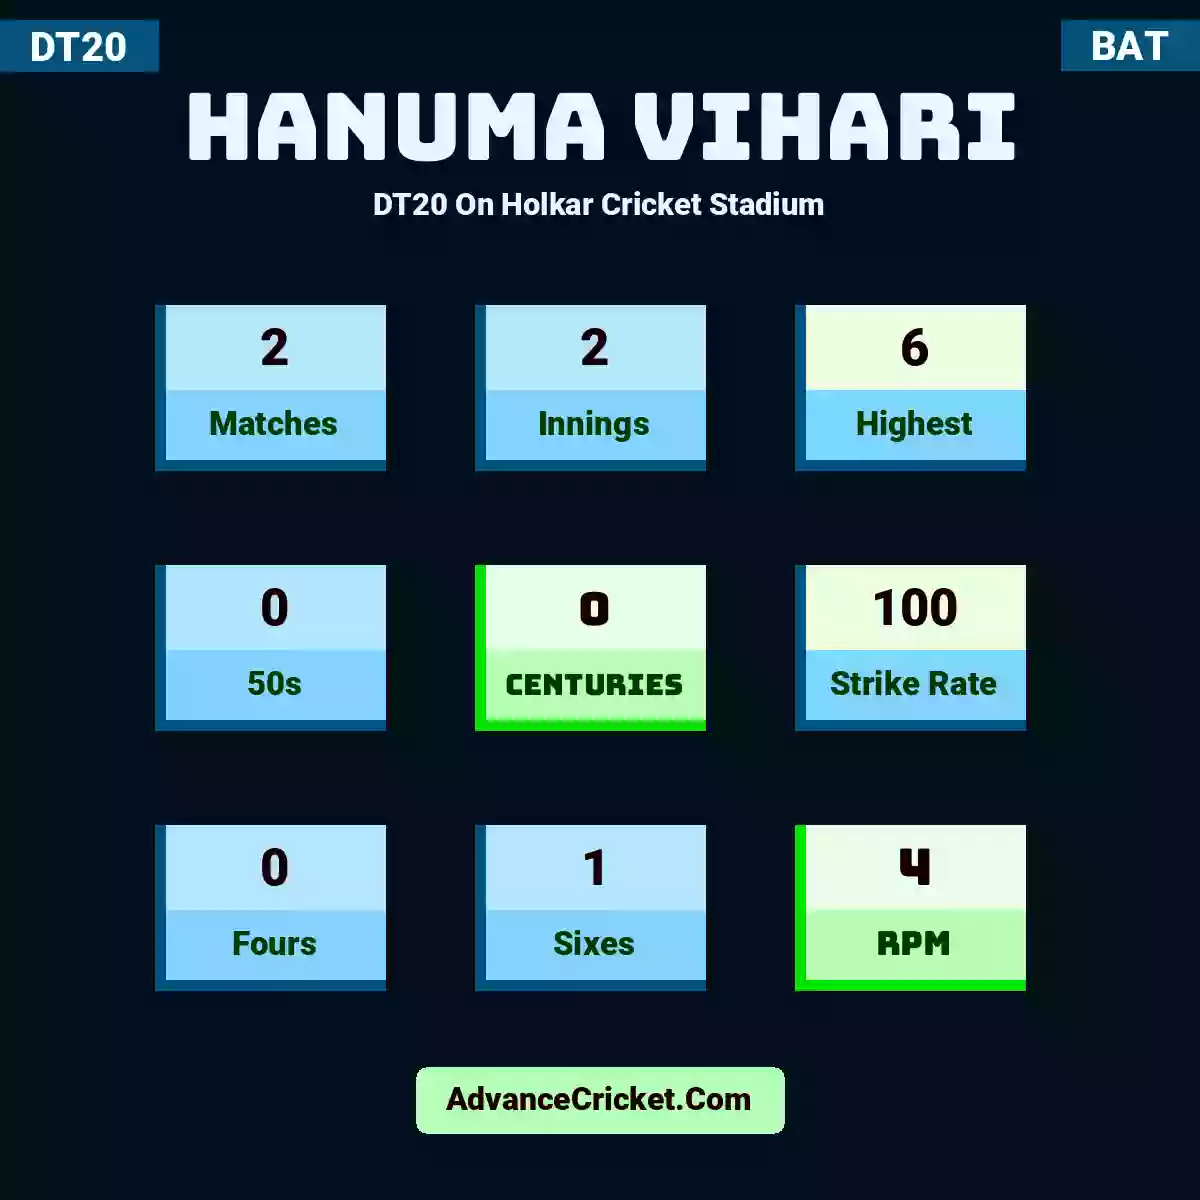 Hanuma Vihari DT20  On Holkar Cricket Stadium, Hanuma Vihari played 2 matches, scored 6 runs as highest, 0 half-centuries, and 0 centuries, with a strike rate of 100. H.Vihari hit 0 fours and 1 sixes, with an RPM of 4.